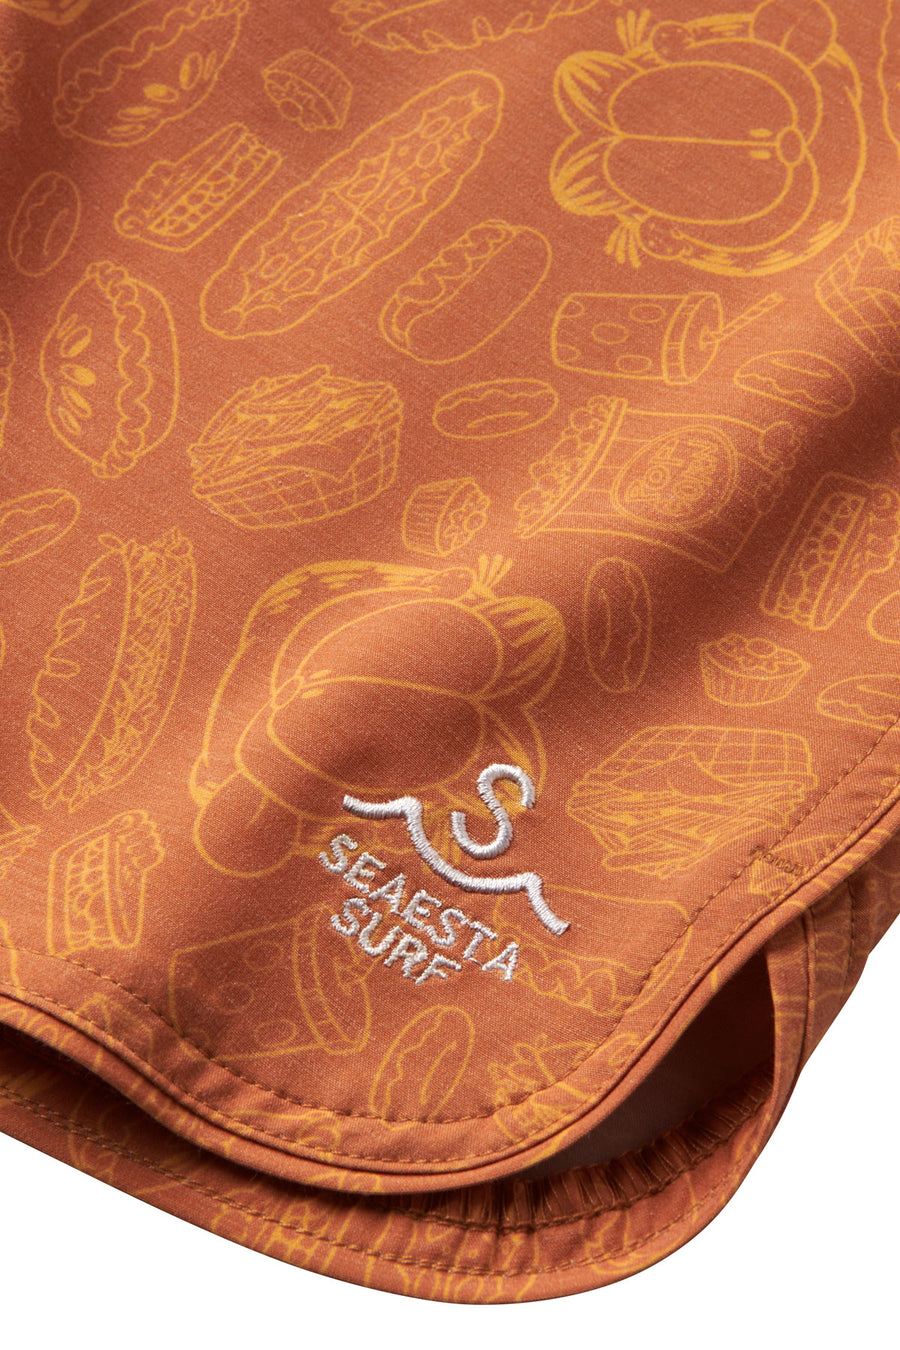 Seaesta Surf x Garfield® Boardshorts / Mens / Grilled Cheese